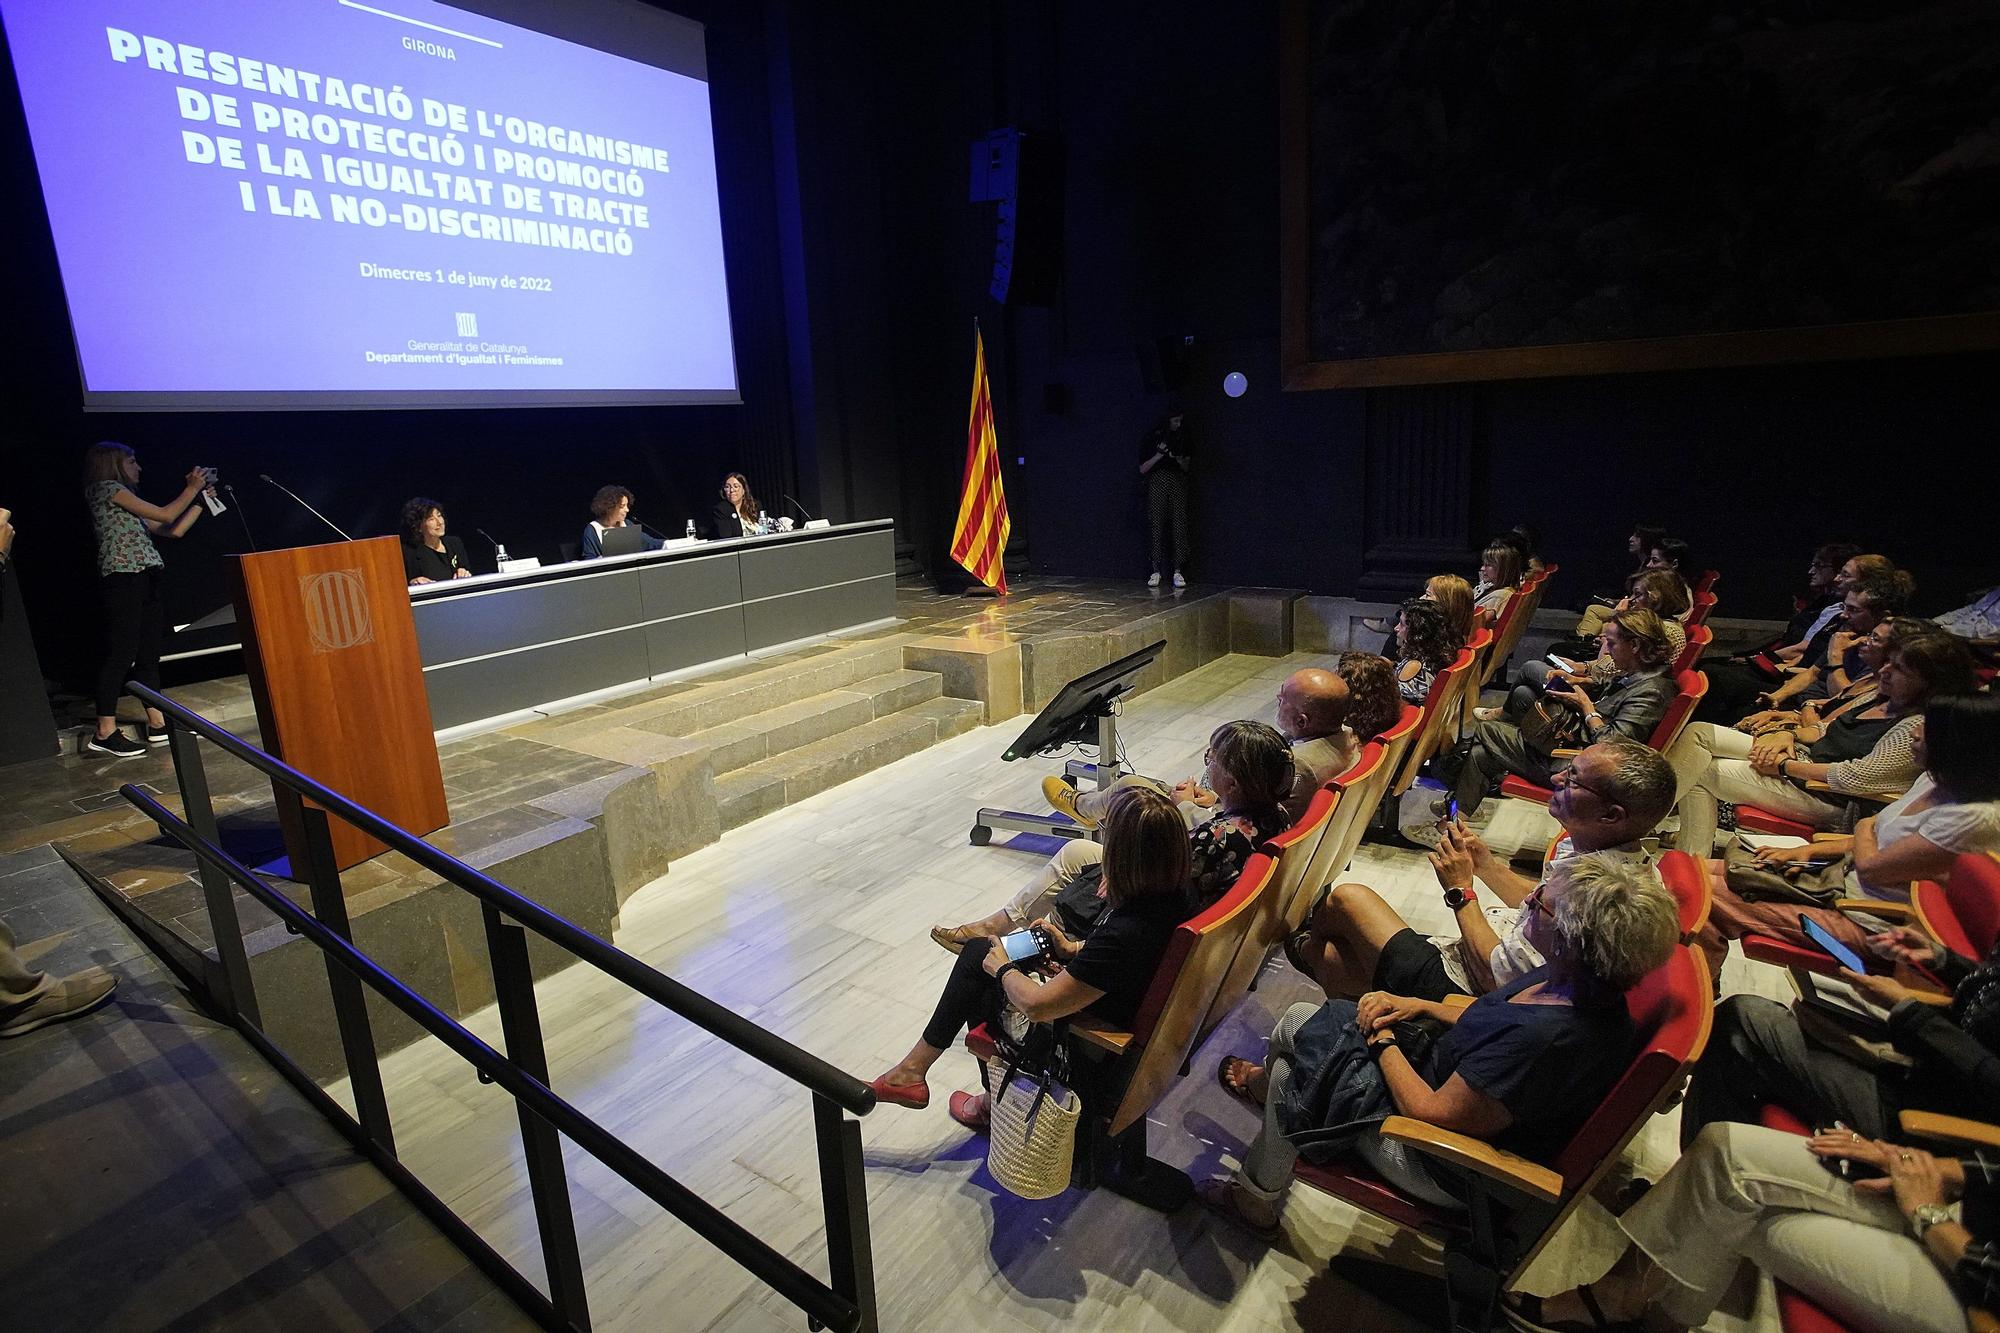 Presenten a Girona un organisme del Govern on es poden denunciar discriminacions